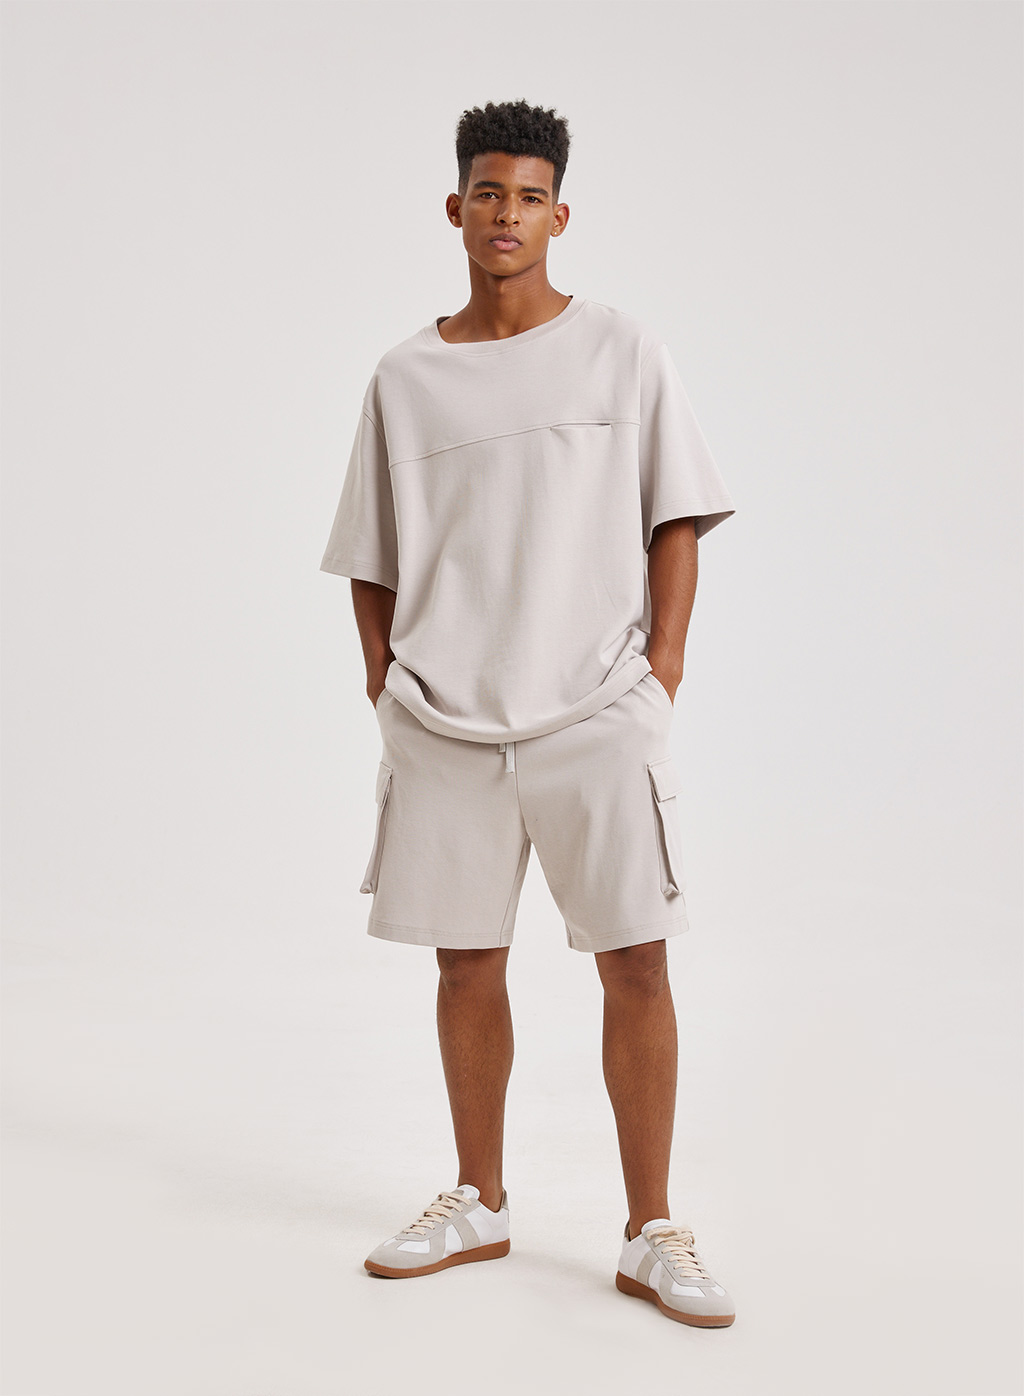 Men Shorts Set | Relaxed Fit Shorts & Cotton T-shirts | Nap Loungwear